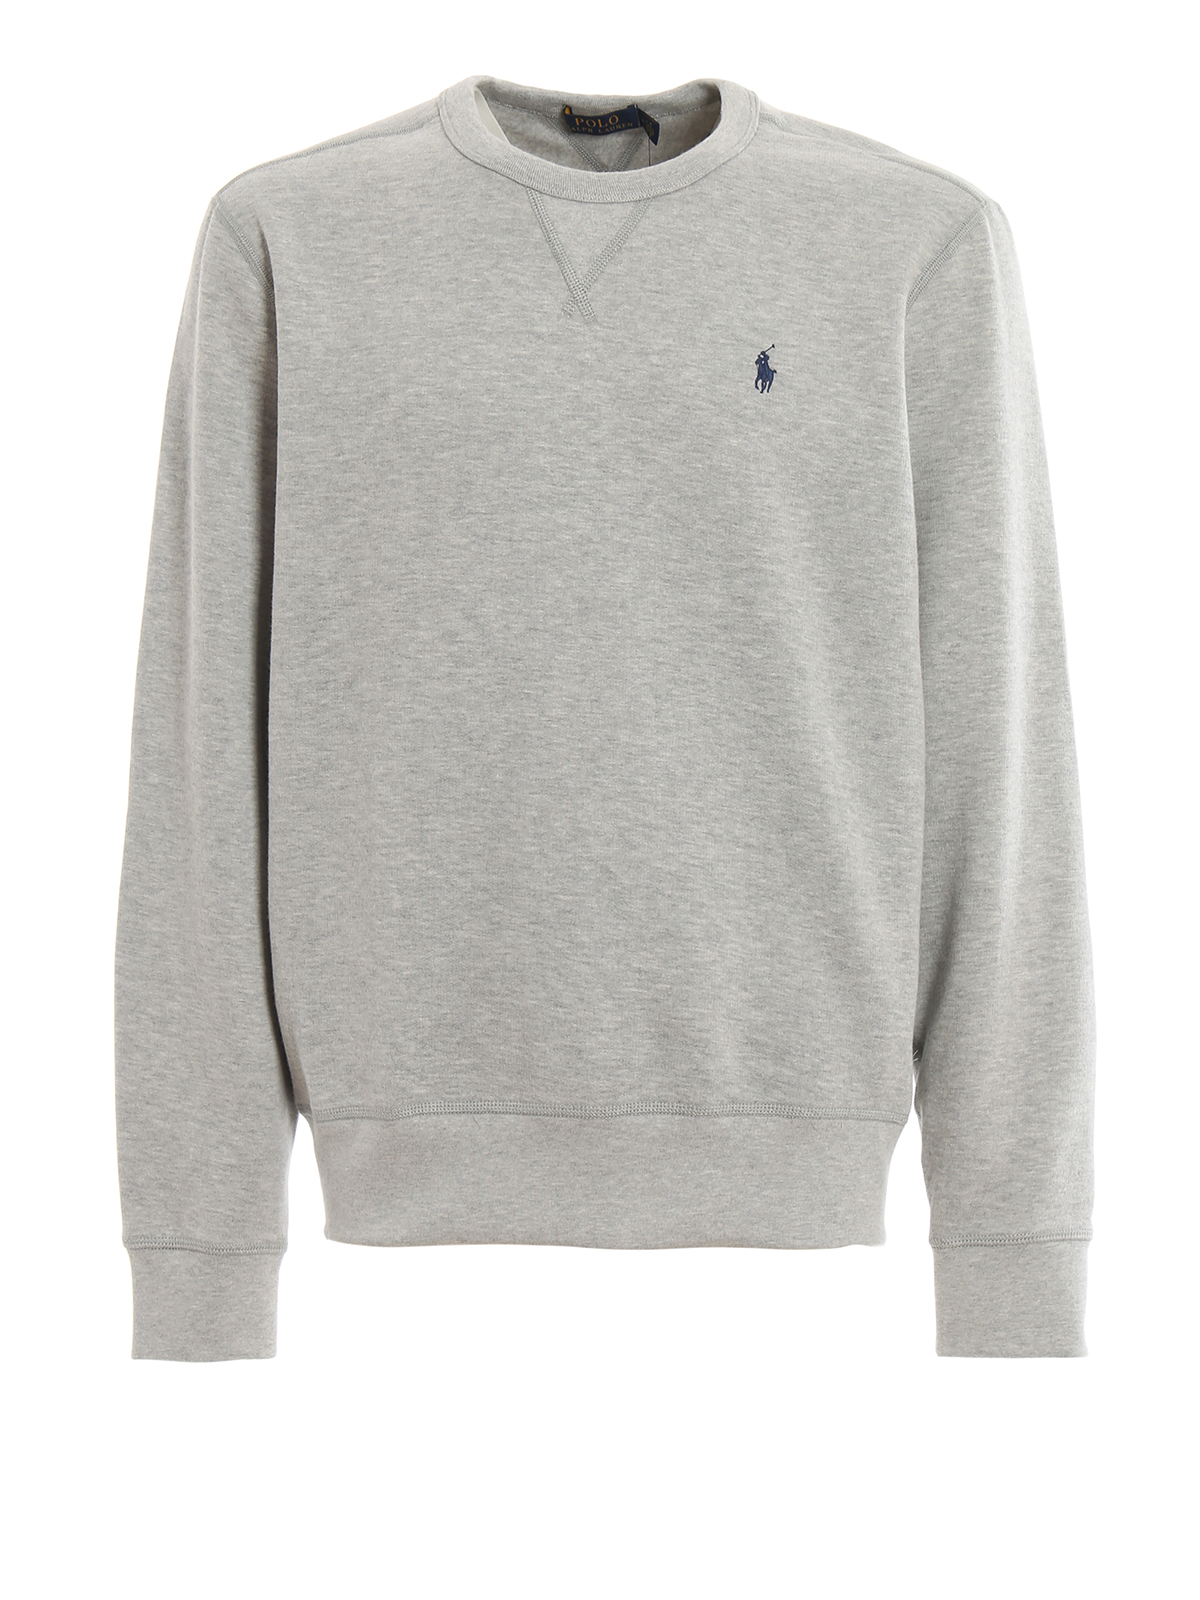 Polo Ralph Lauren Grey Cotton Blend Sweatshirt